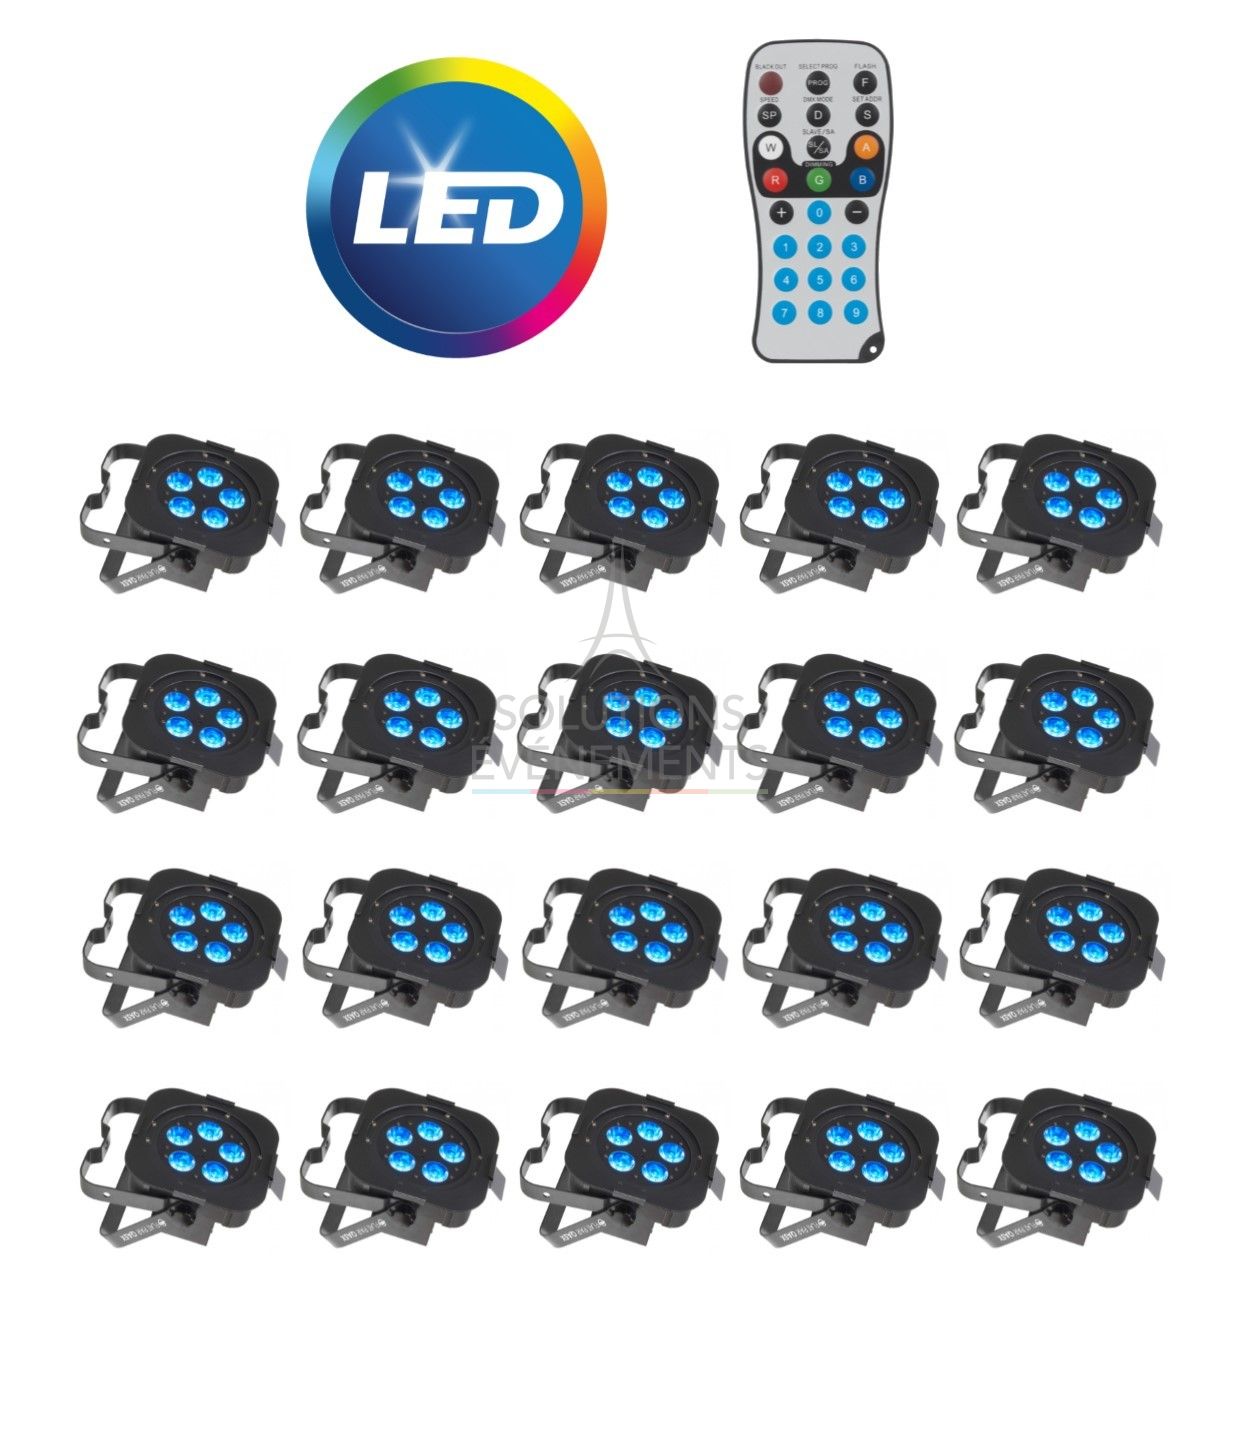 LED projector rental